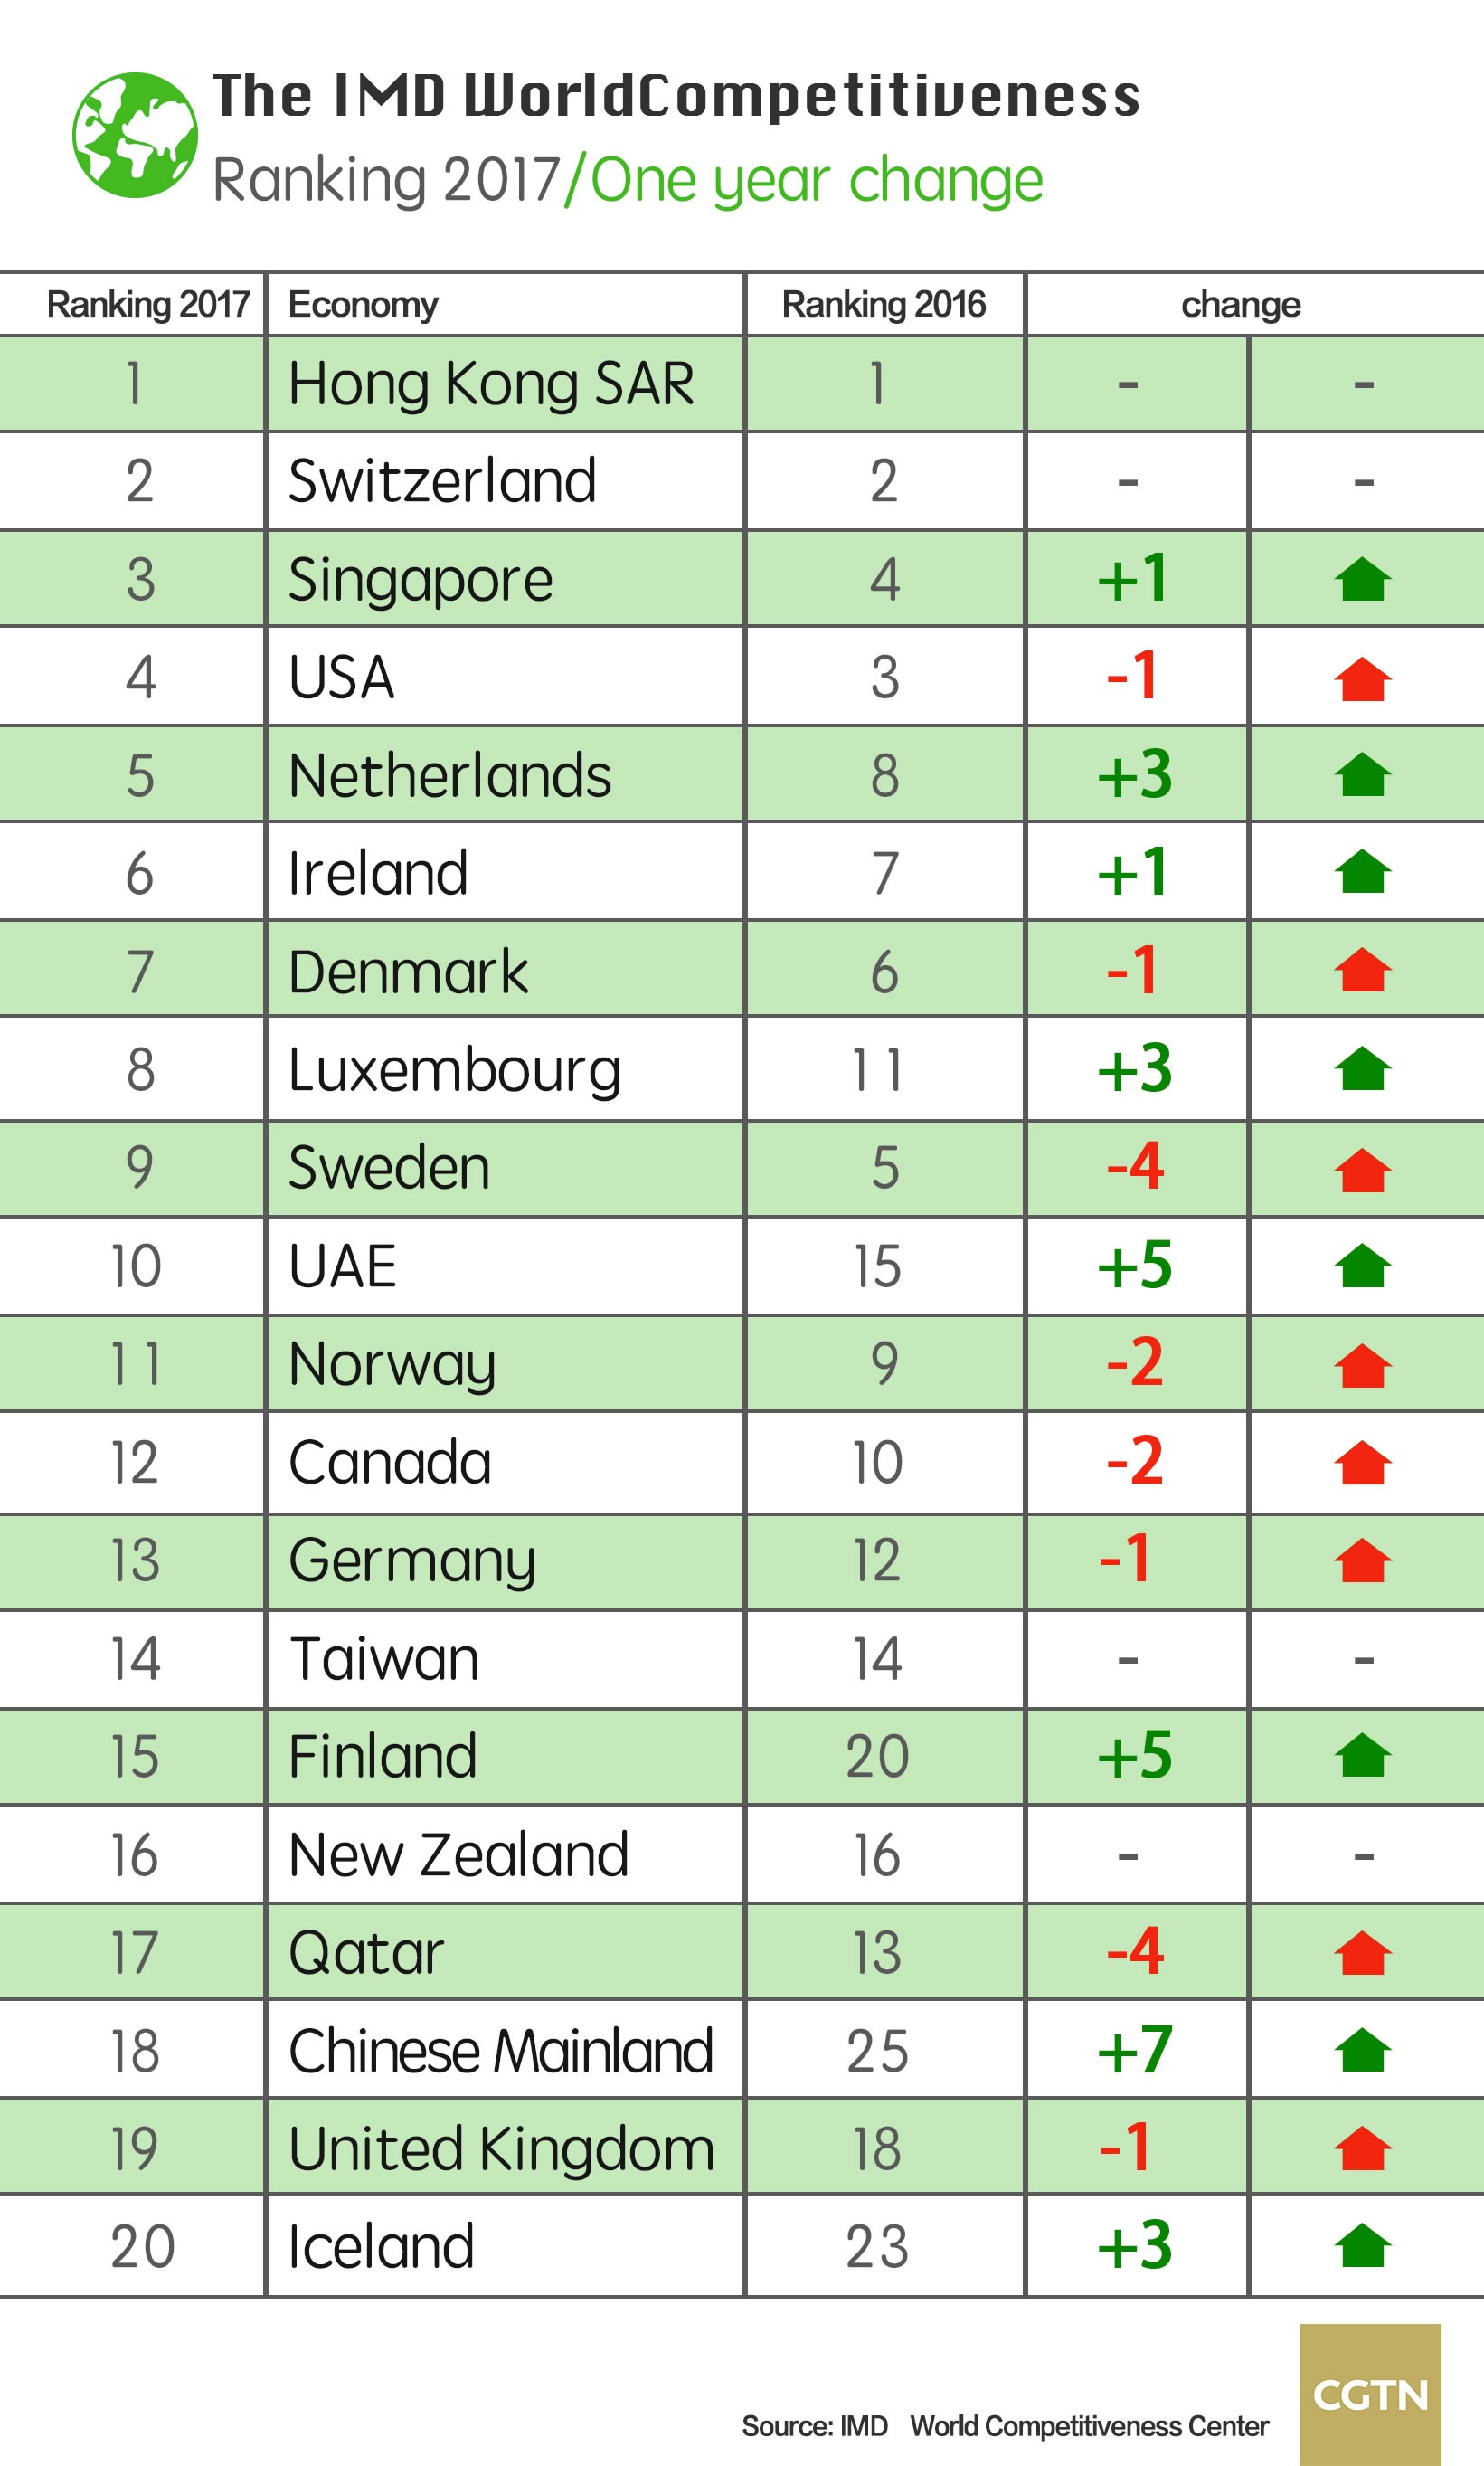 Top 20 of IMD World Competitiveness Ranking 2017 [Photo: CGTN]